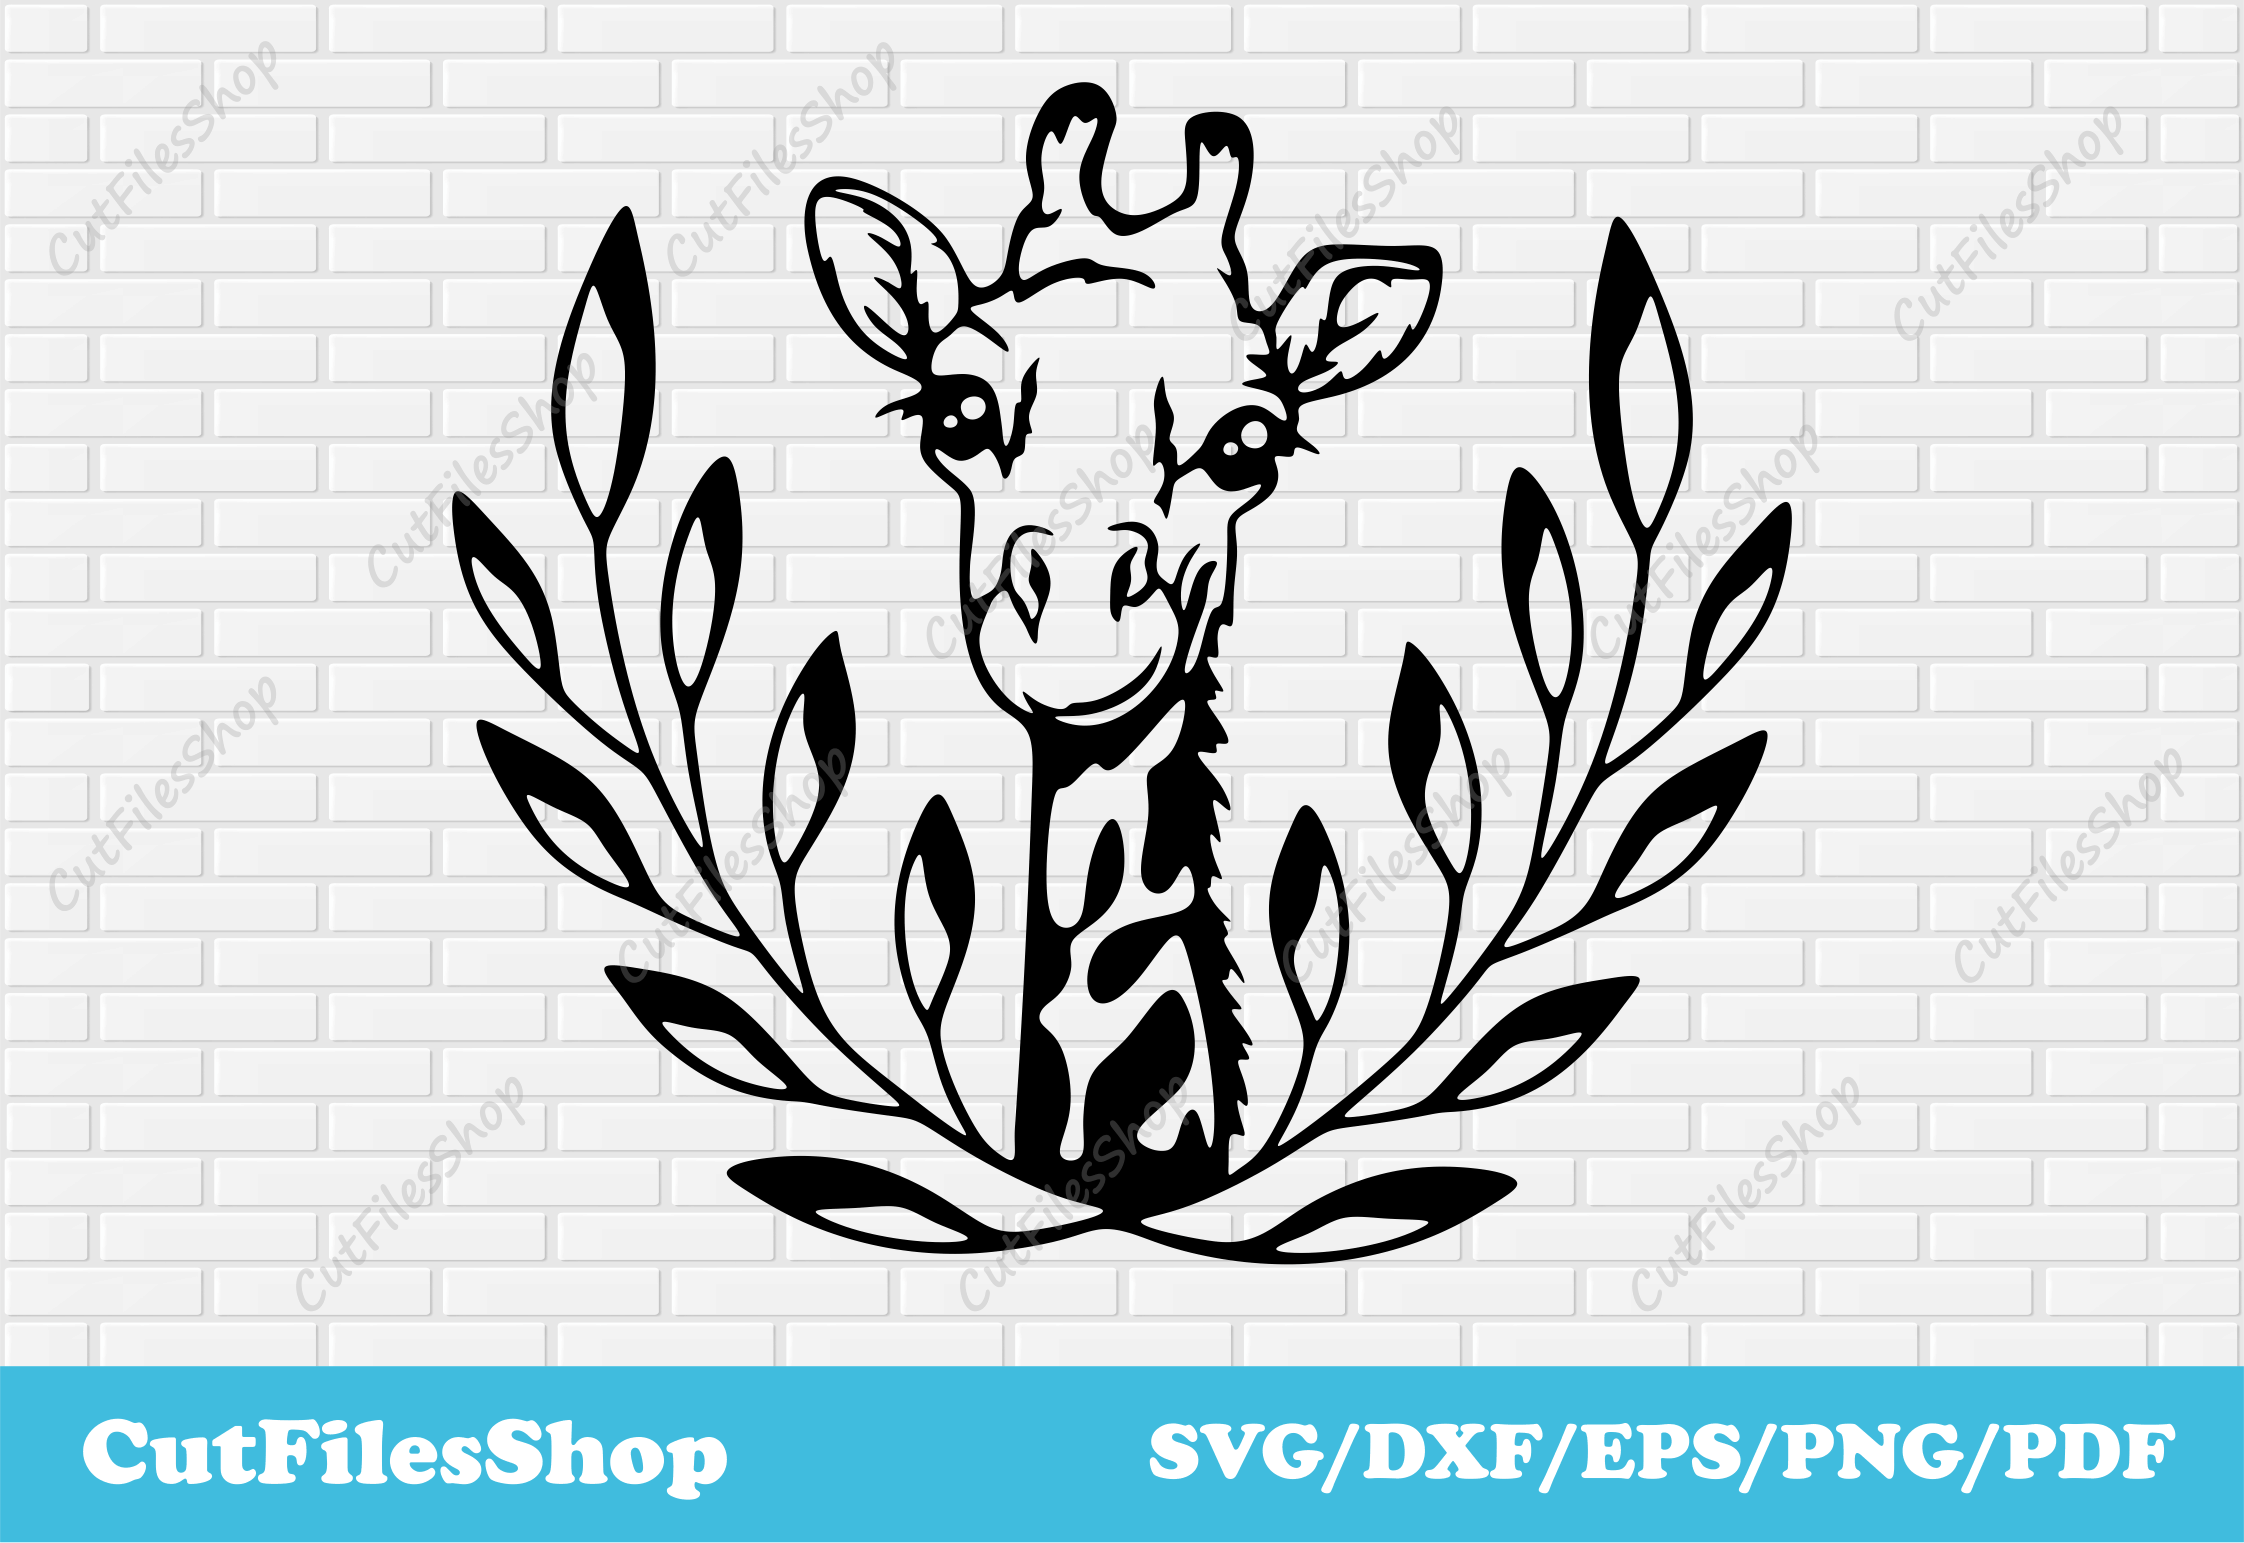 SVG Cut Files for Cricut and Silhouette - Giraffe Silhouettes SVG